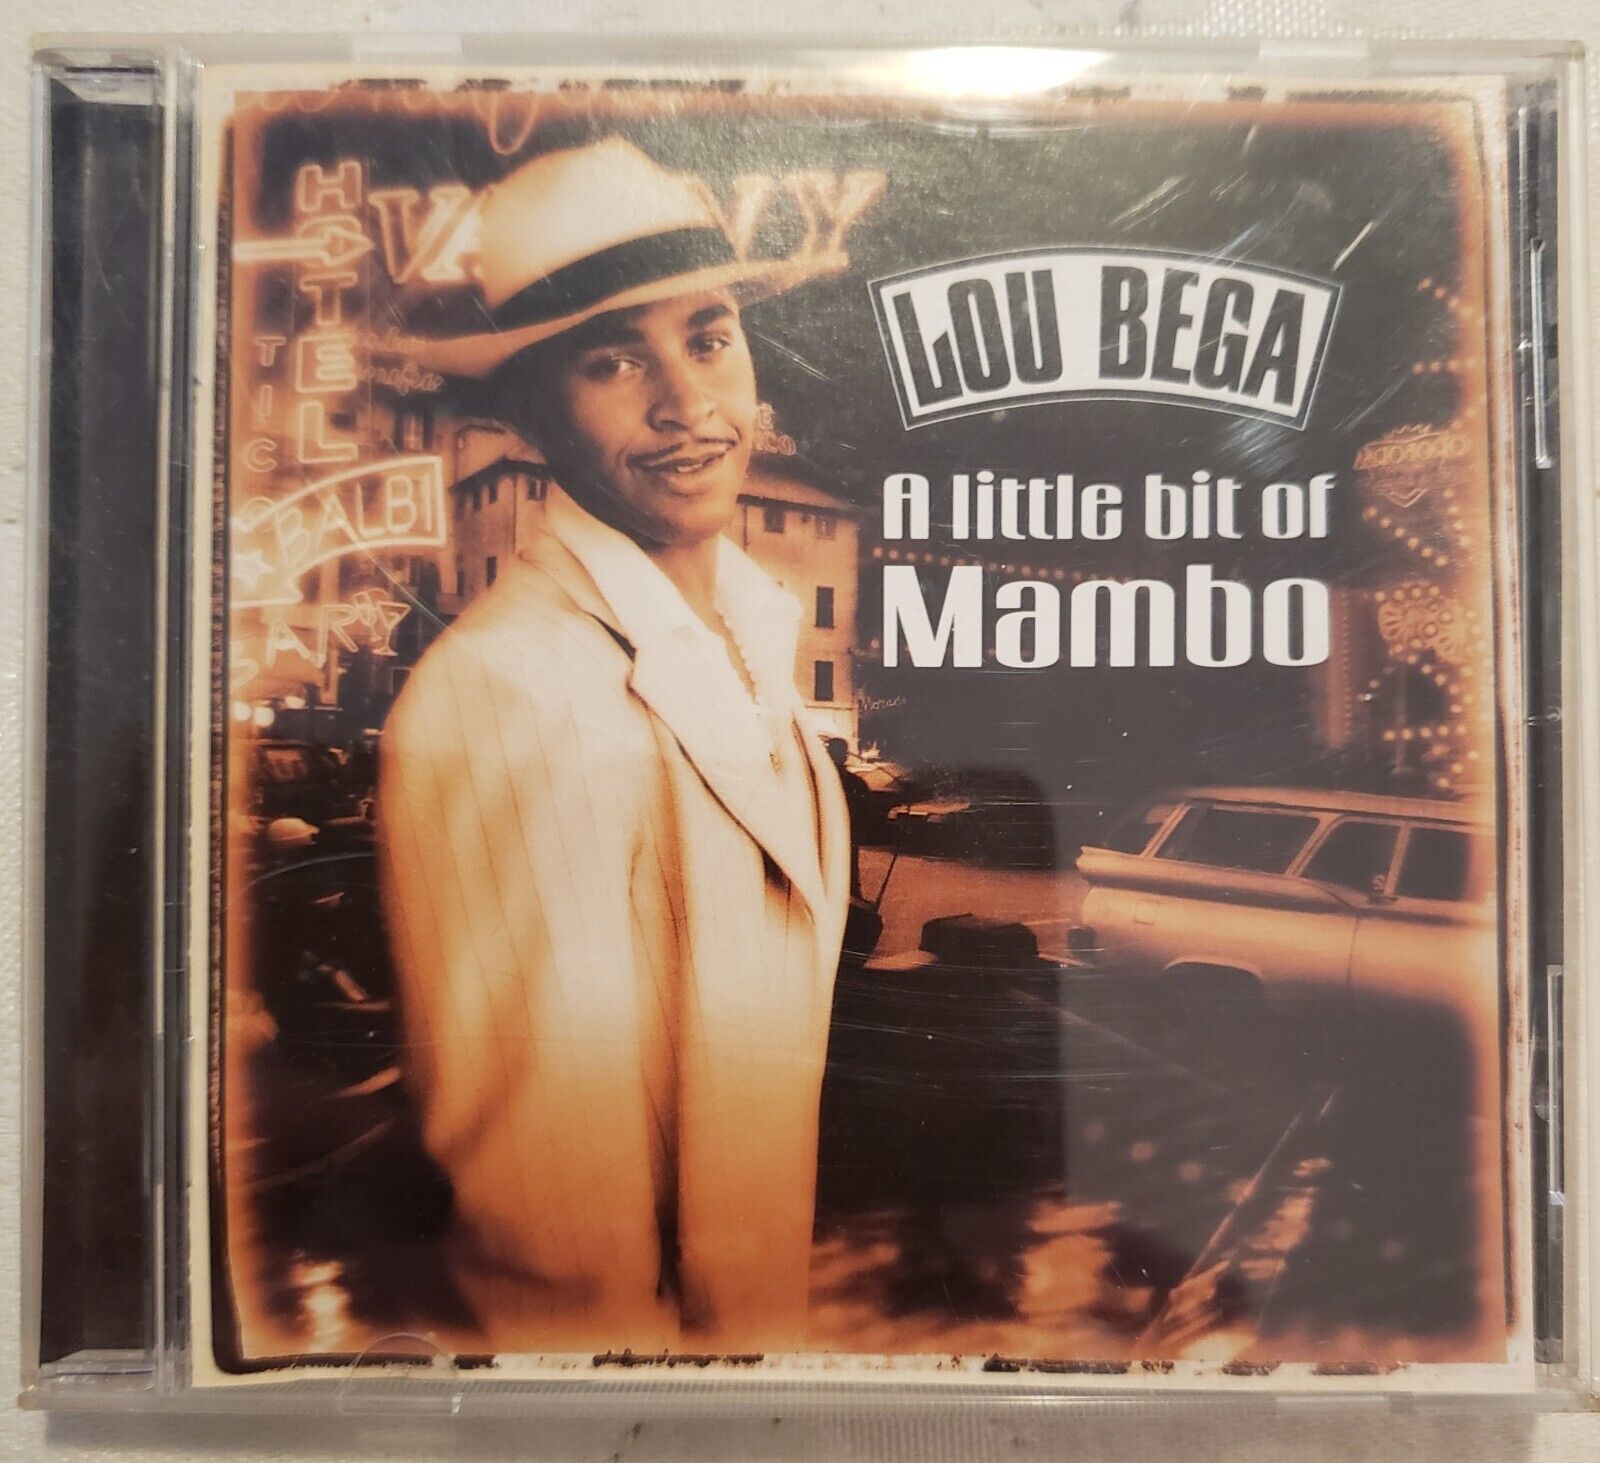 Lou Bega - CD - A Little Bit of Mambo - BMG Berlin 1999